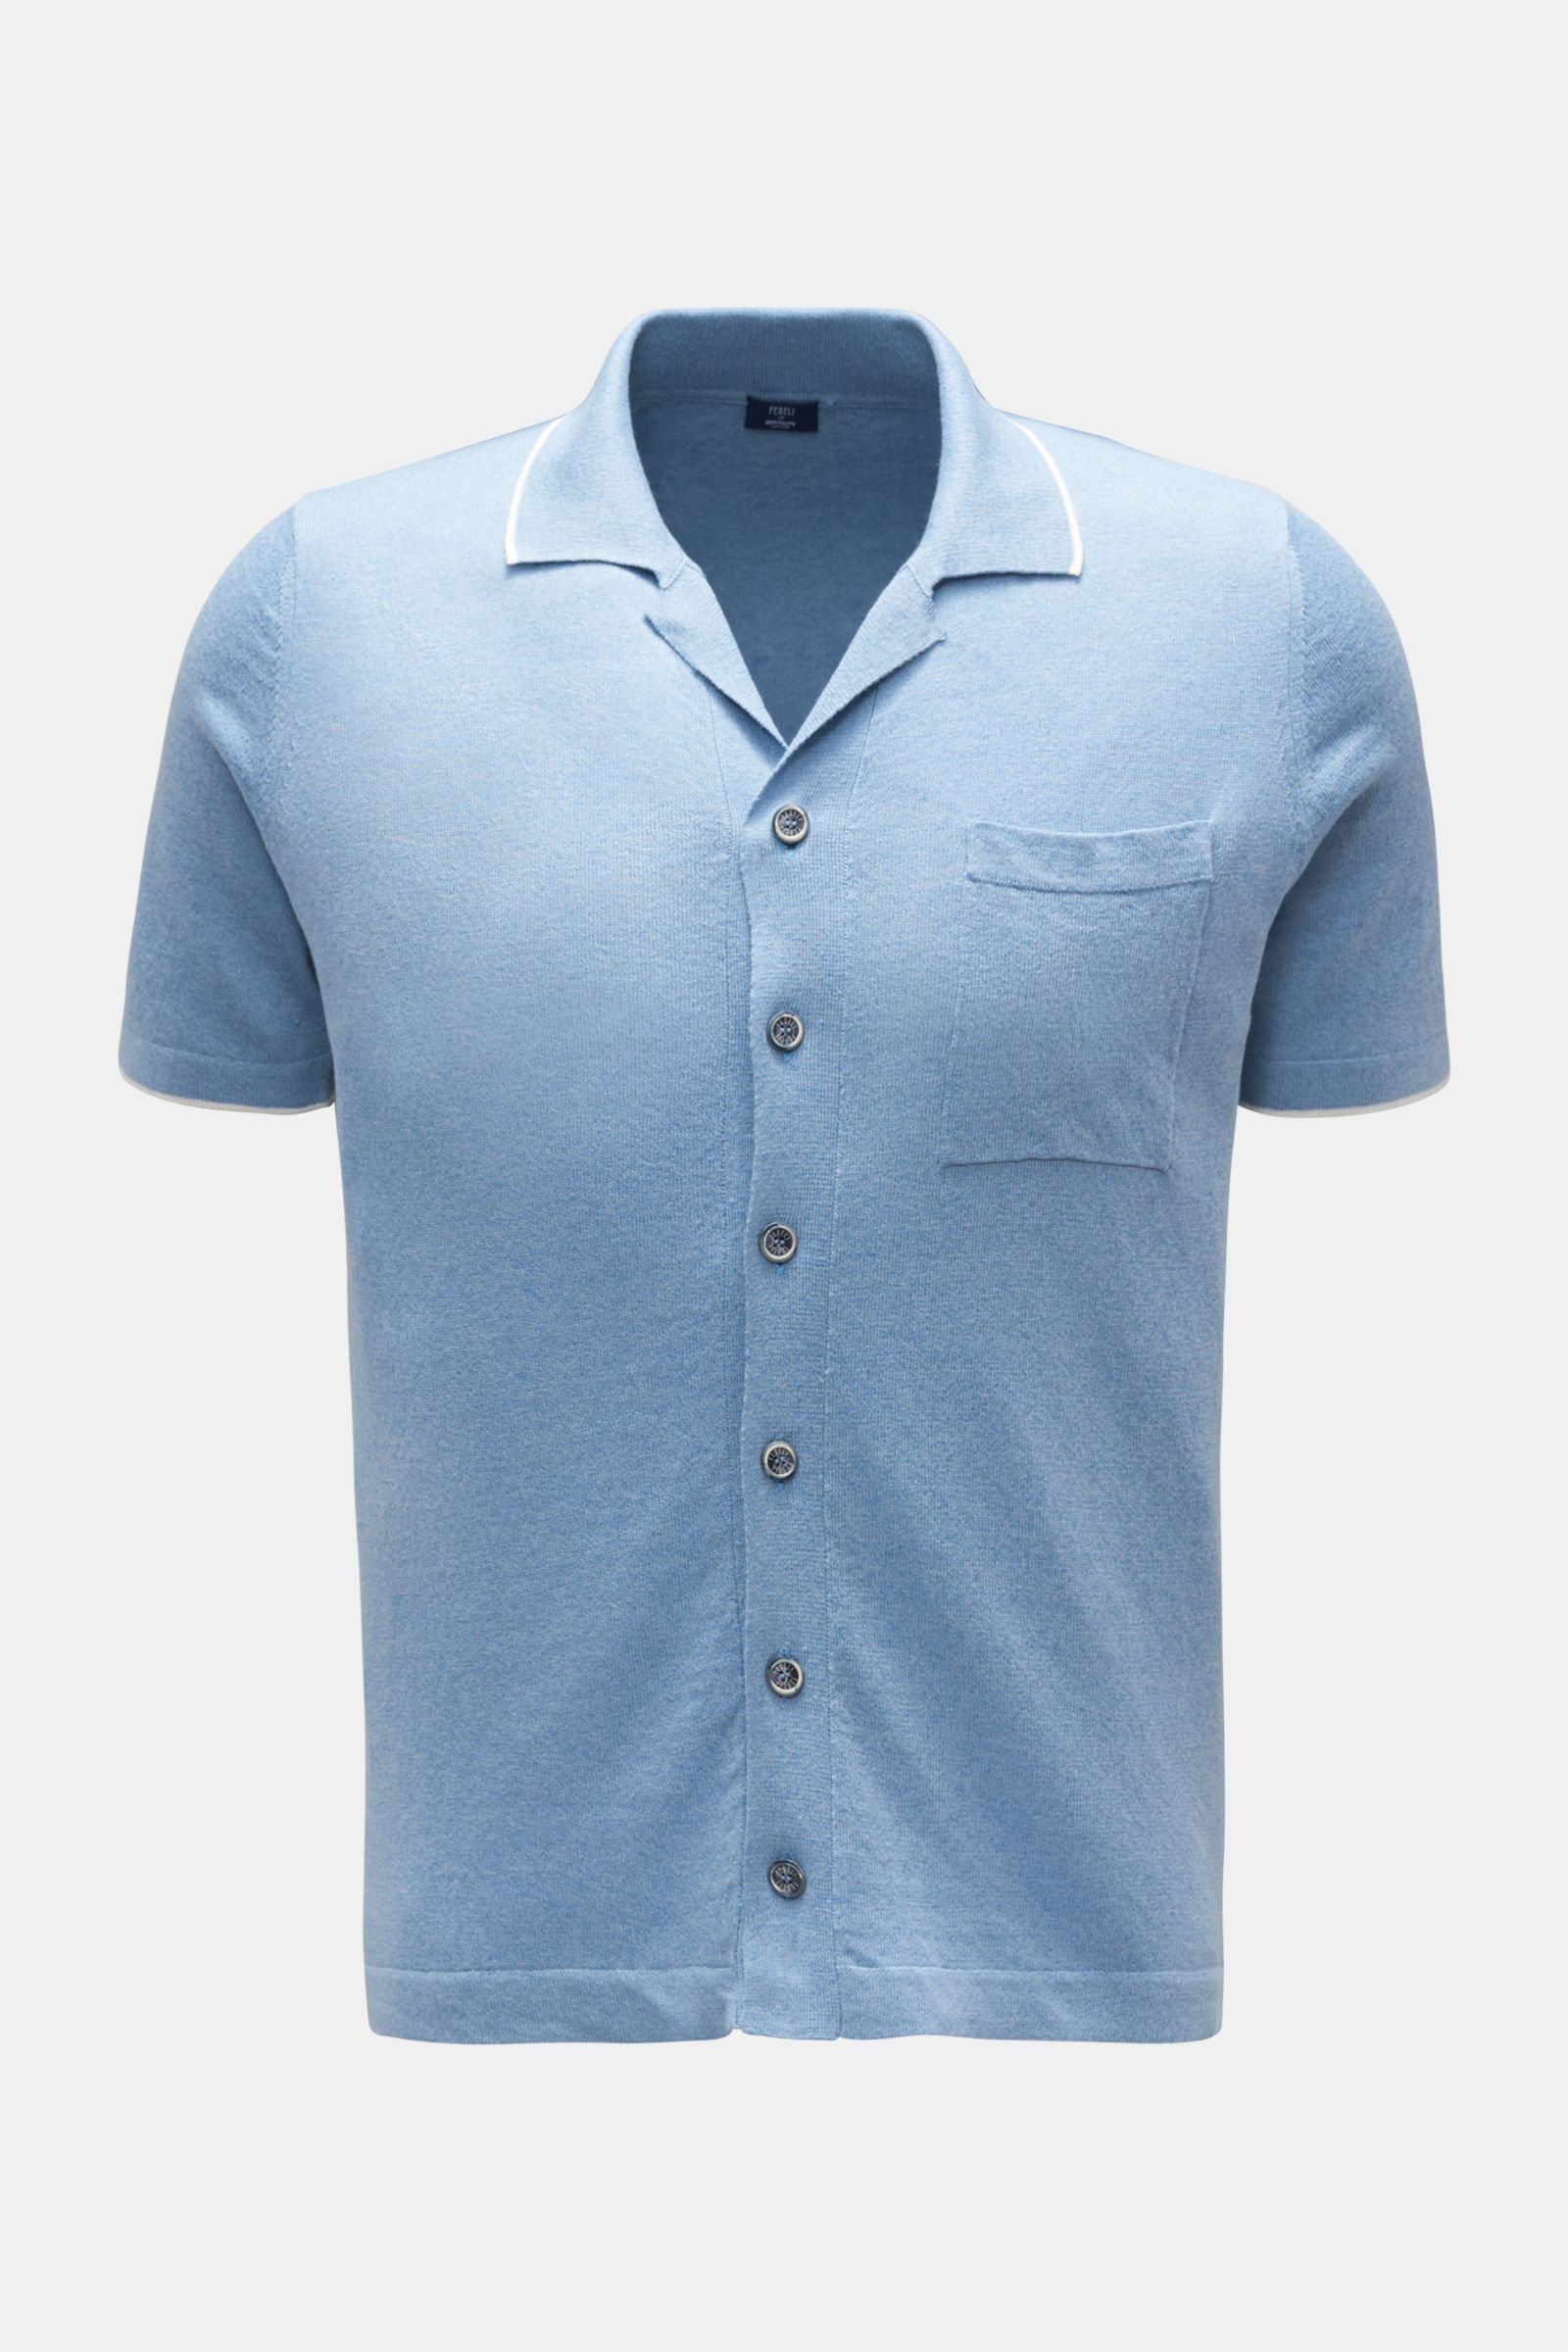 Short sleeve knit shirt 'Jazz' Cuban collar smoky blue